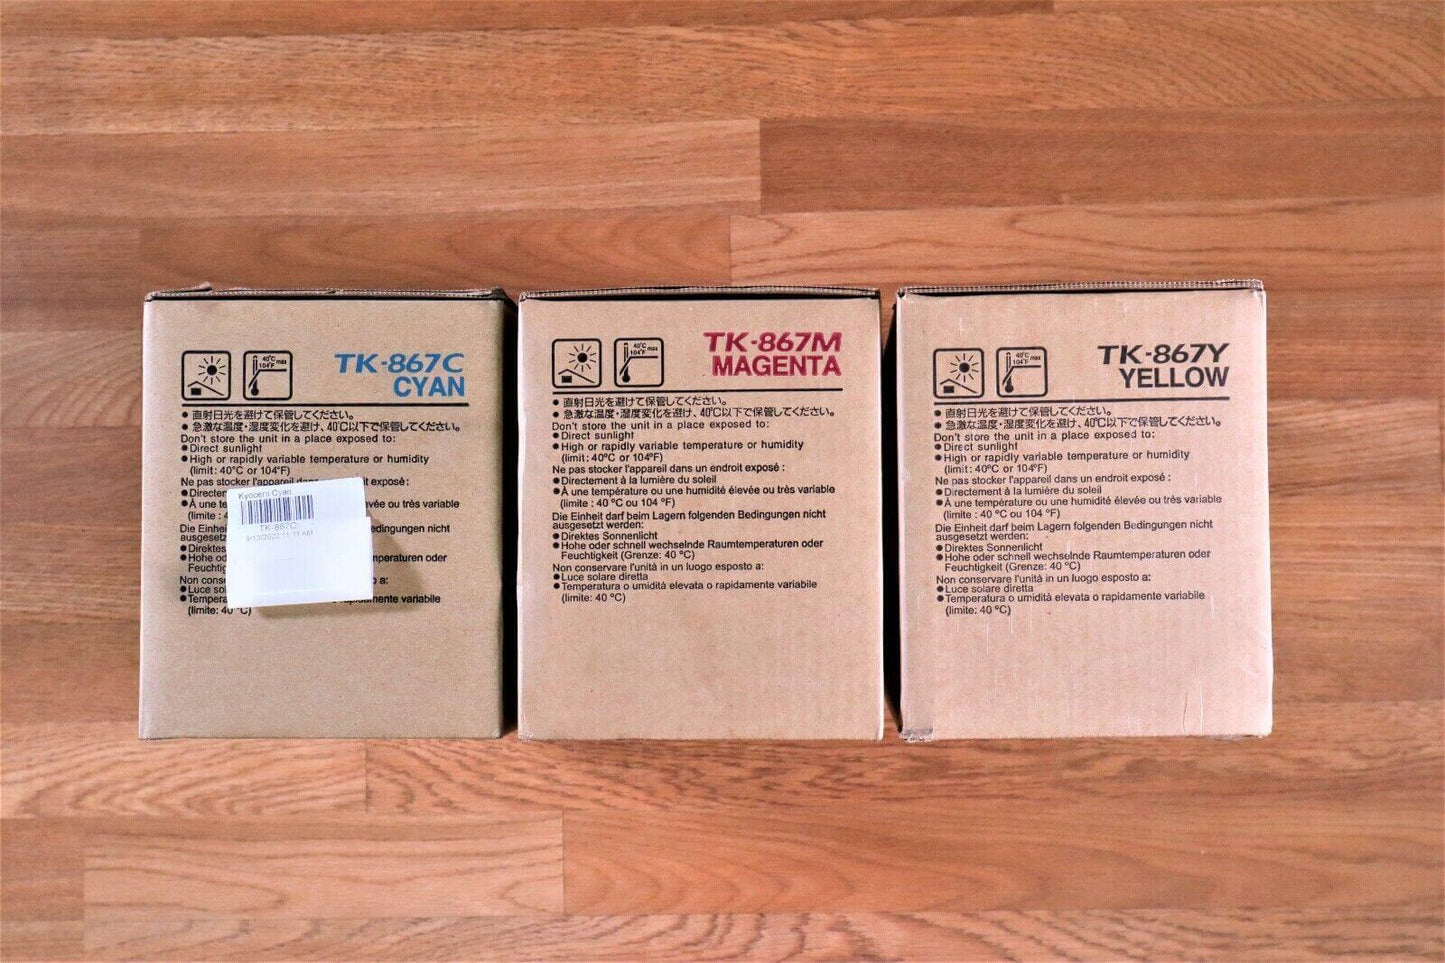 Genuine Kyocera TK-867 CMY Toner Kit Set For 250ci / 300ci Same Day Shipping!!!! - copier-clearance-center